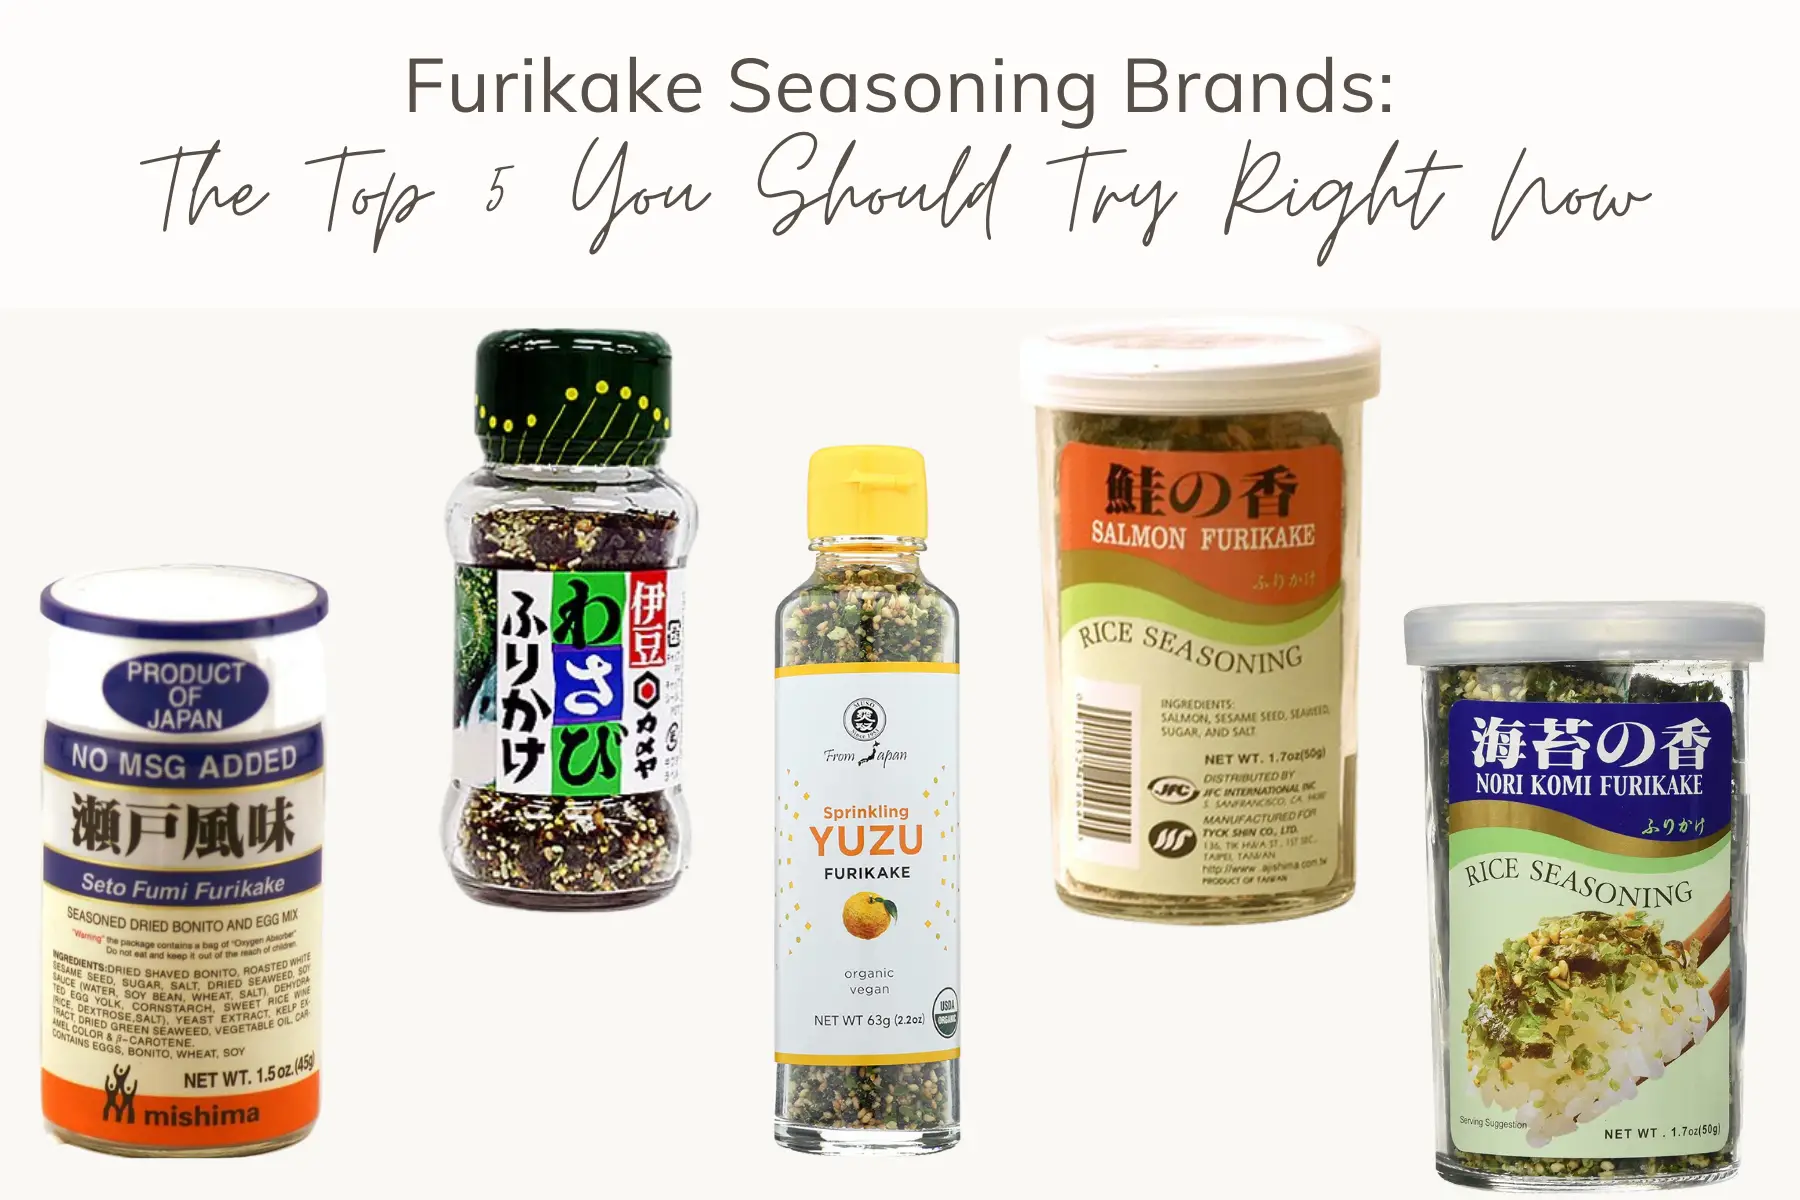 Top 5 Furikake Seasoning Brands